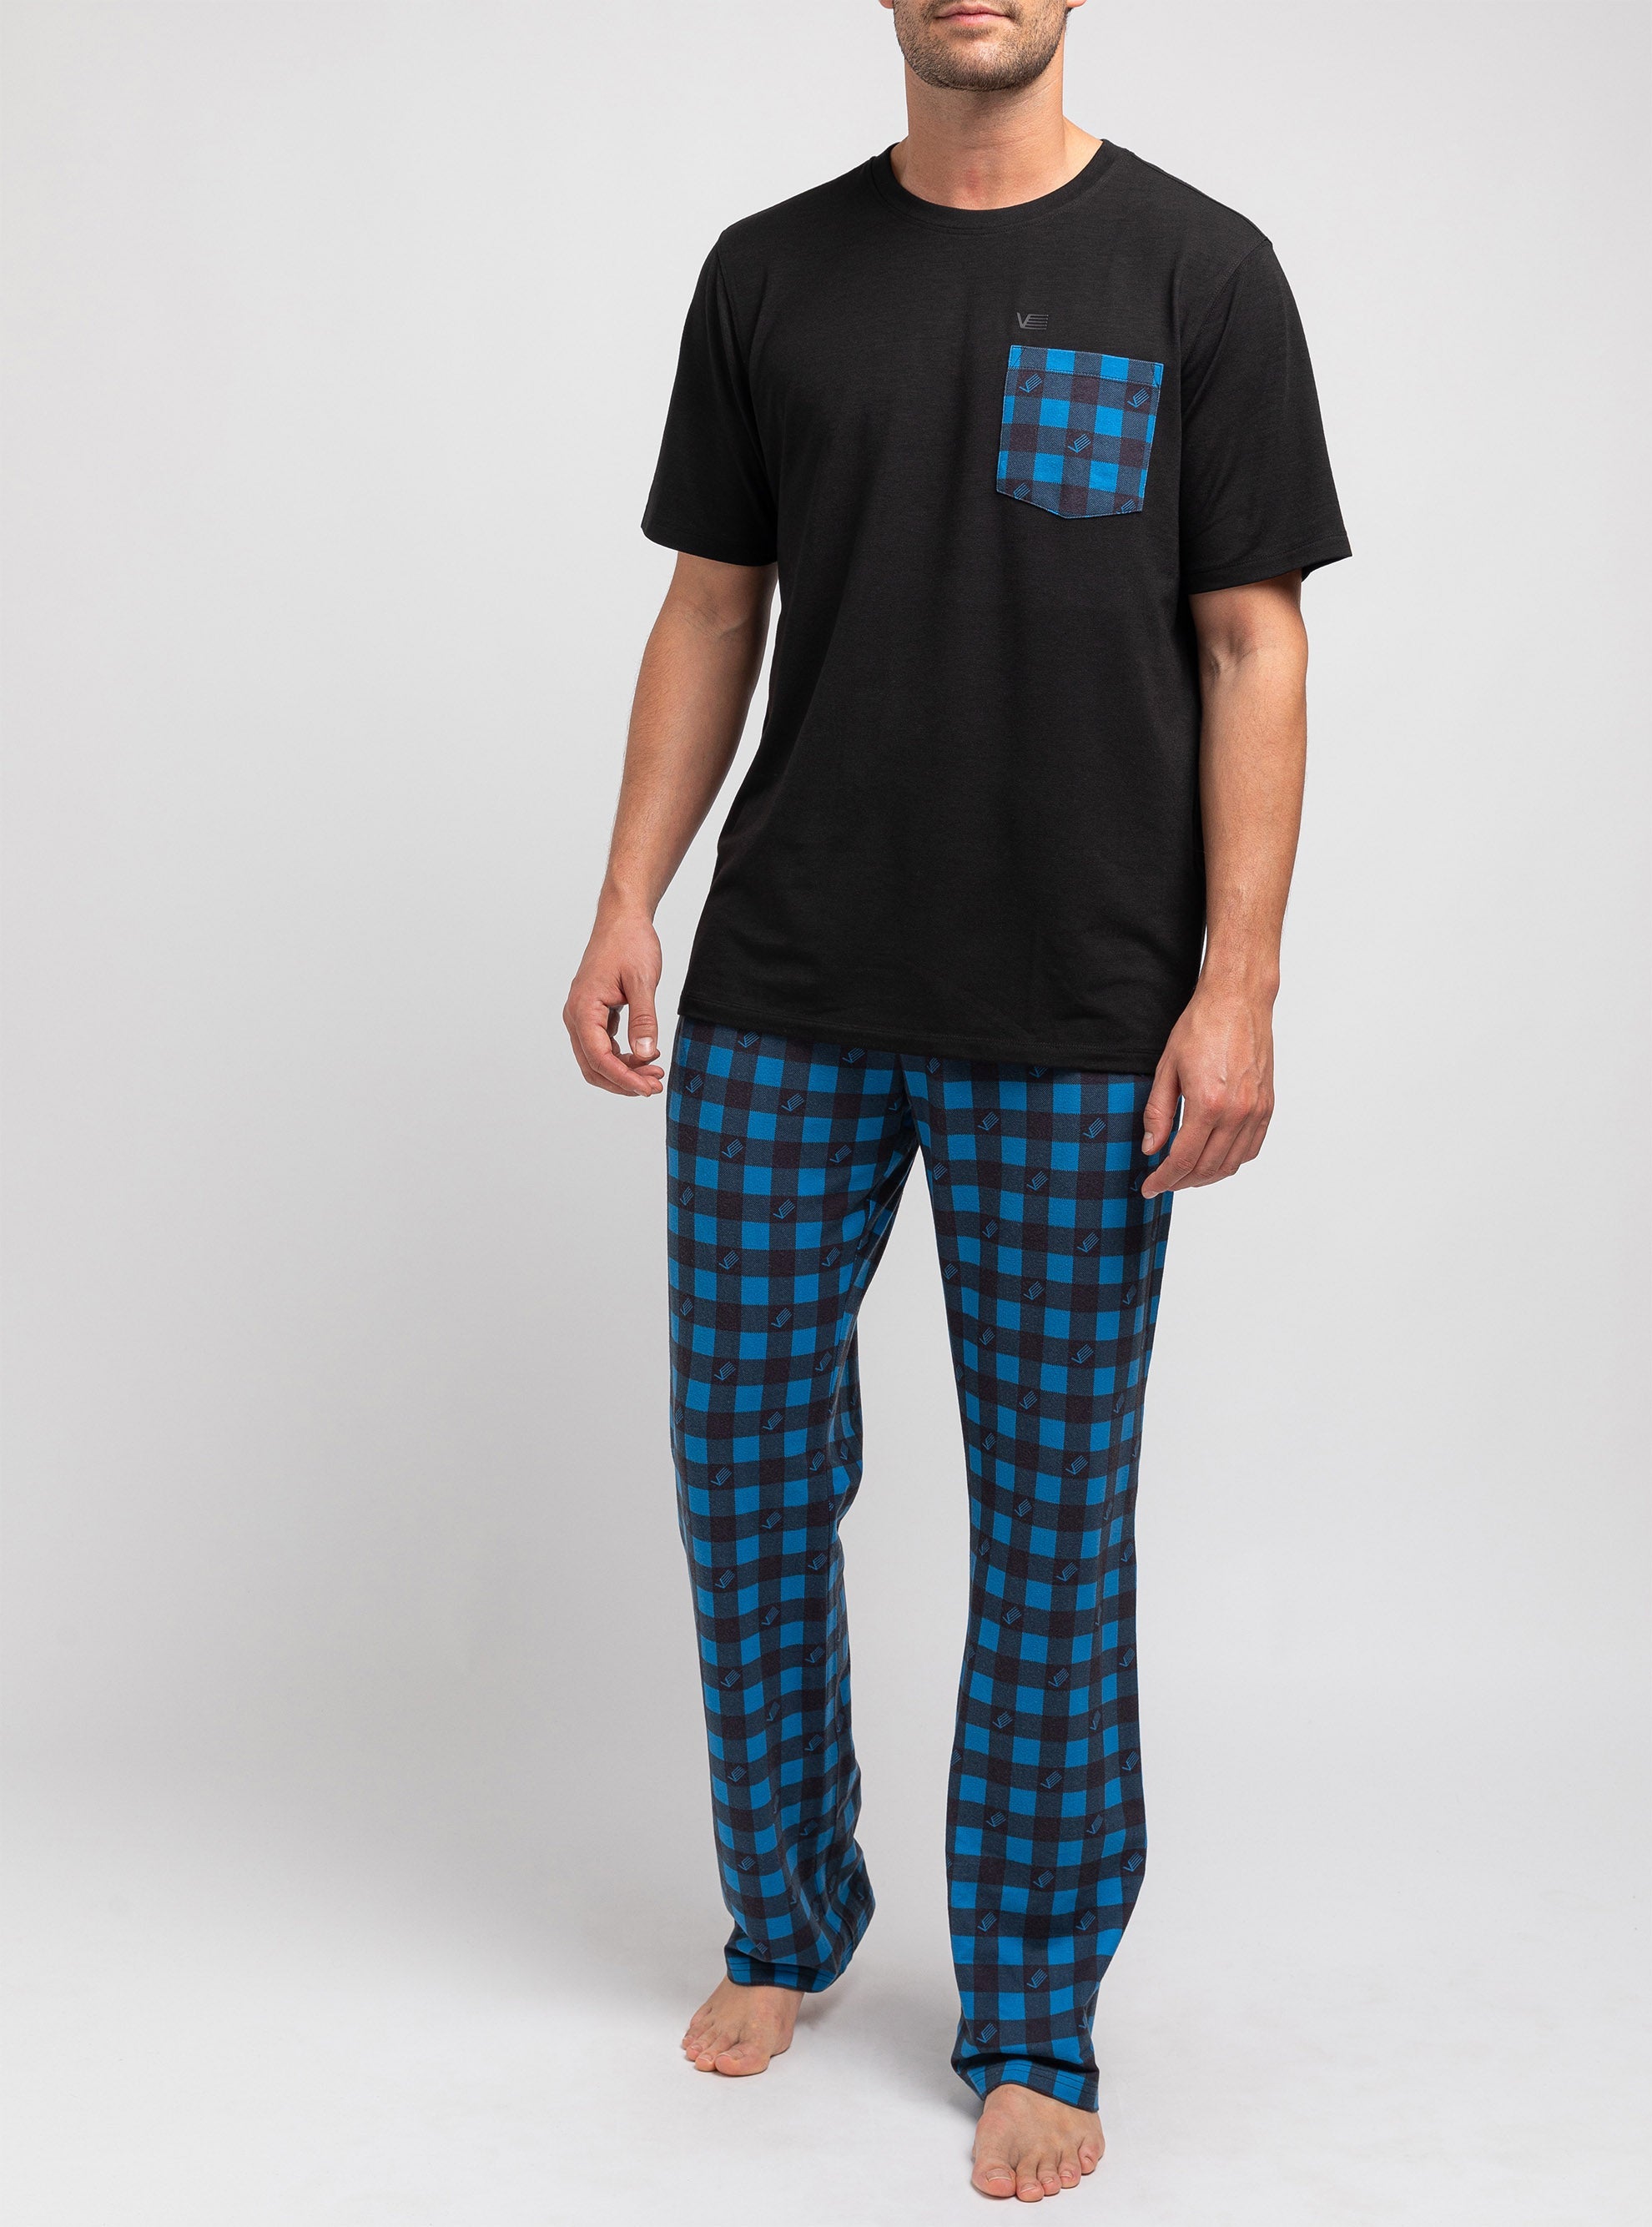 Sodalite blue plaid pajama set